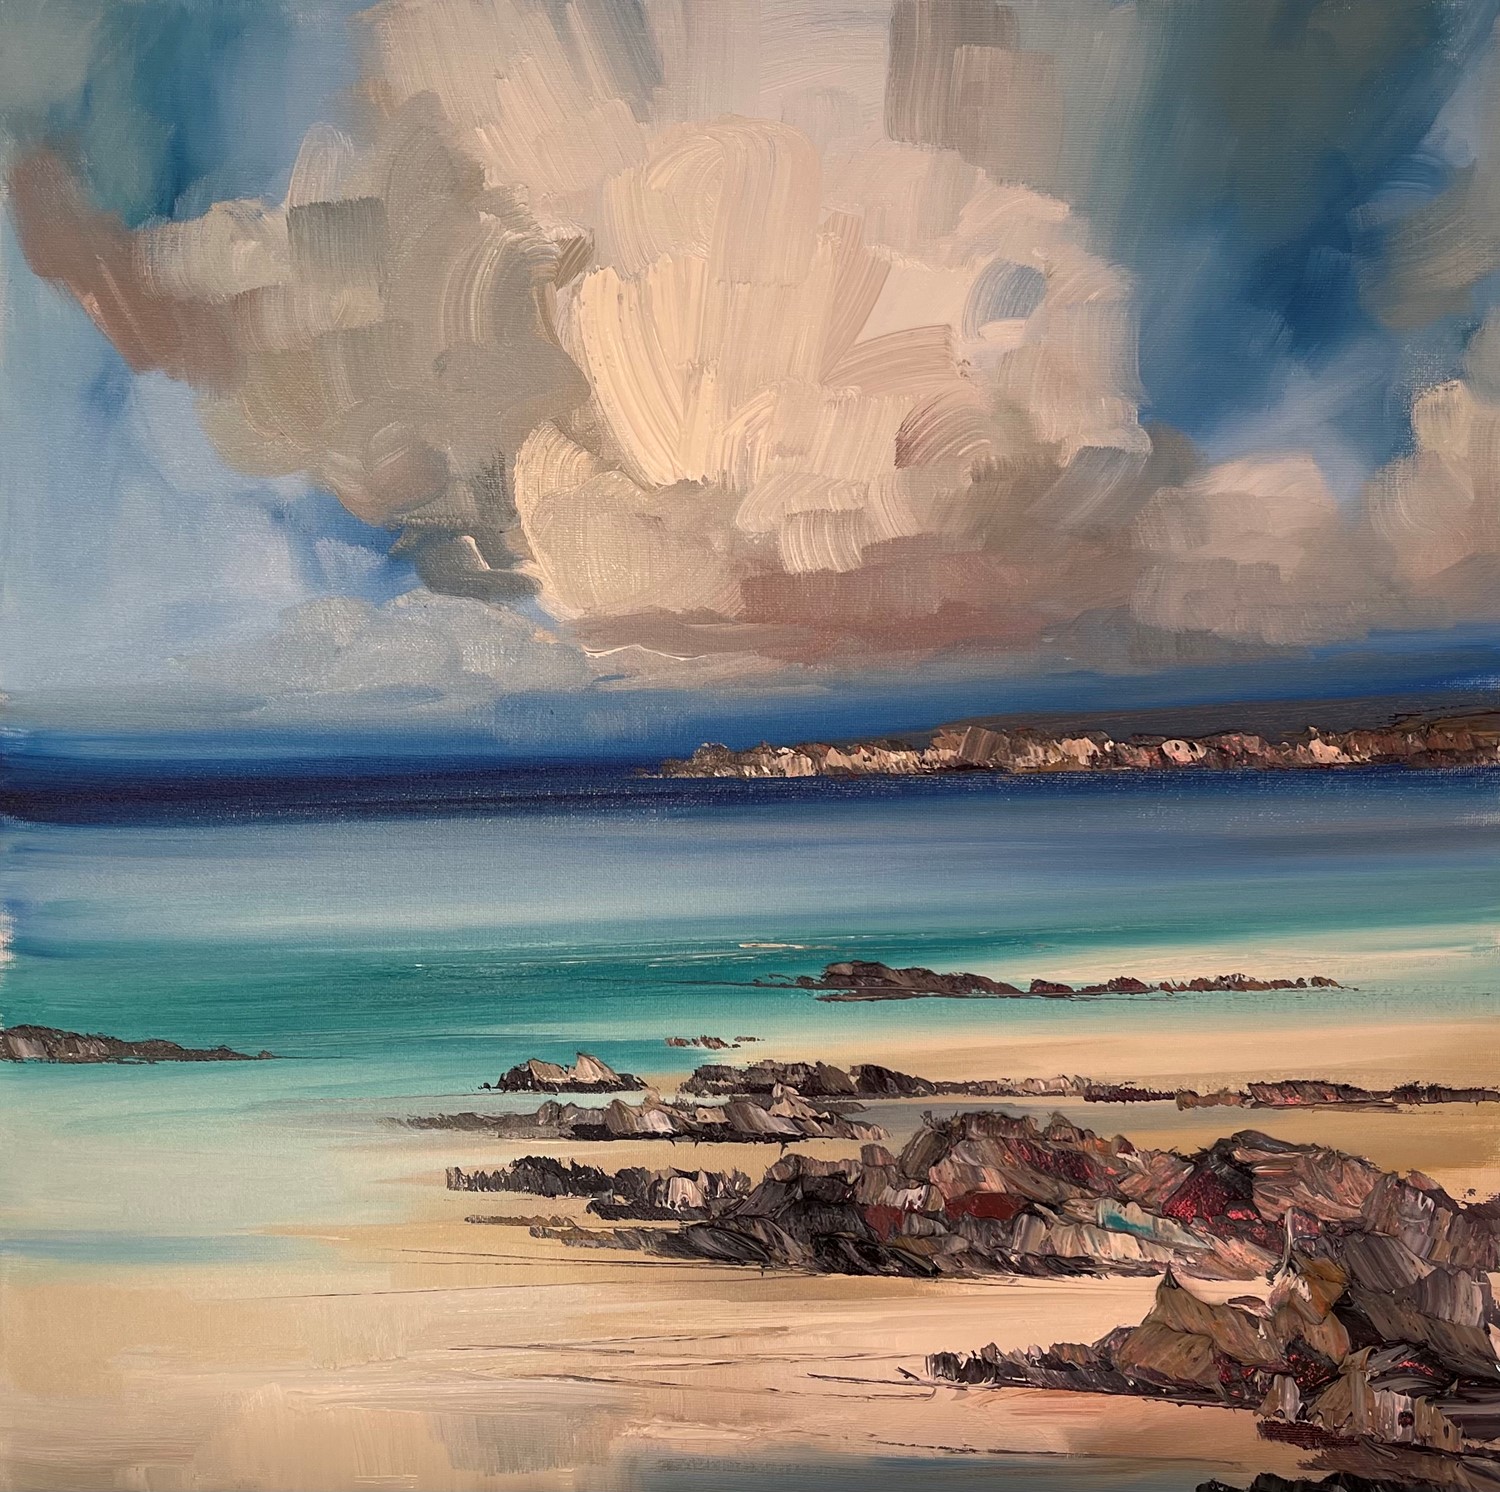 'On Aqua Shores' by artist Rosanne Barr